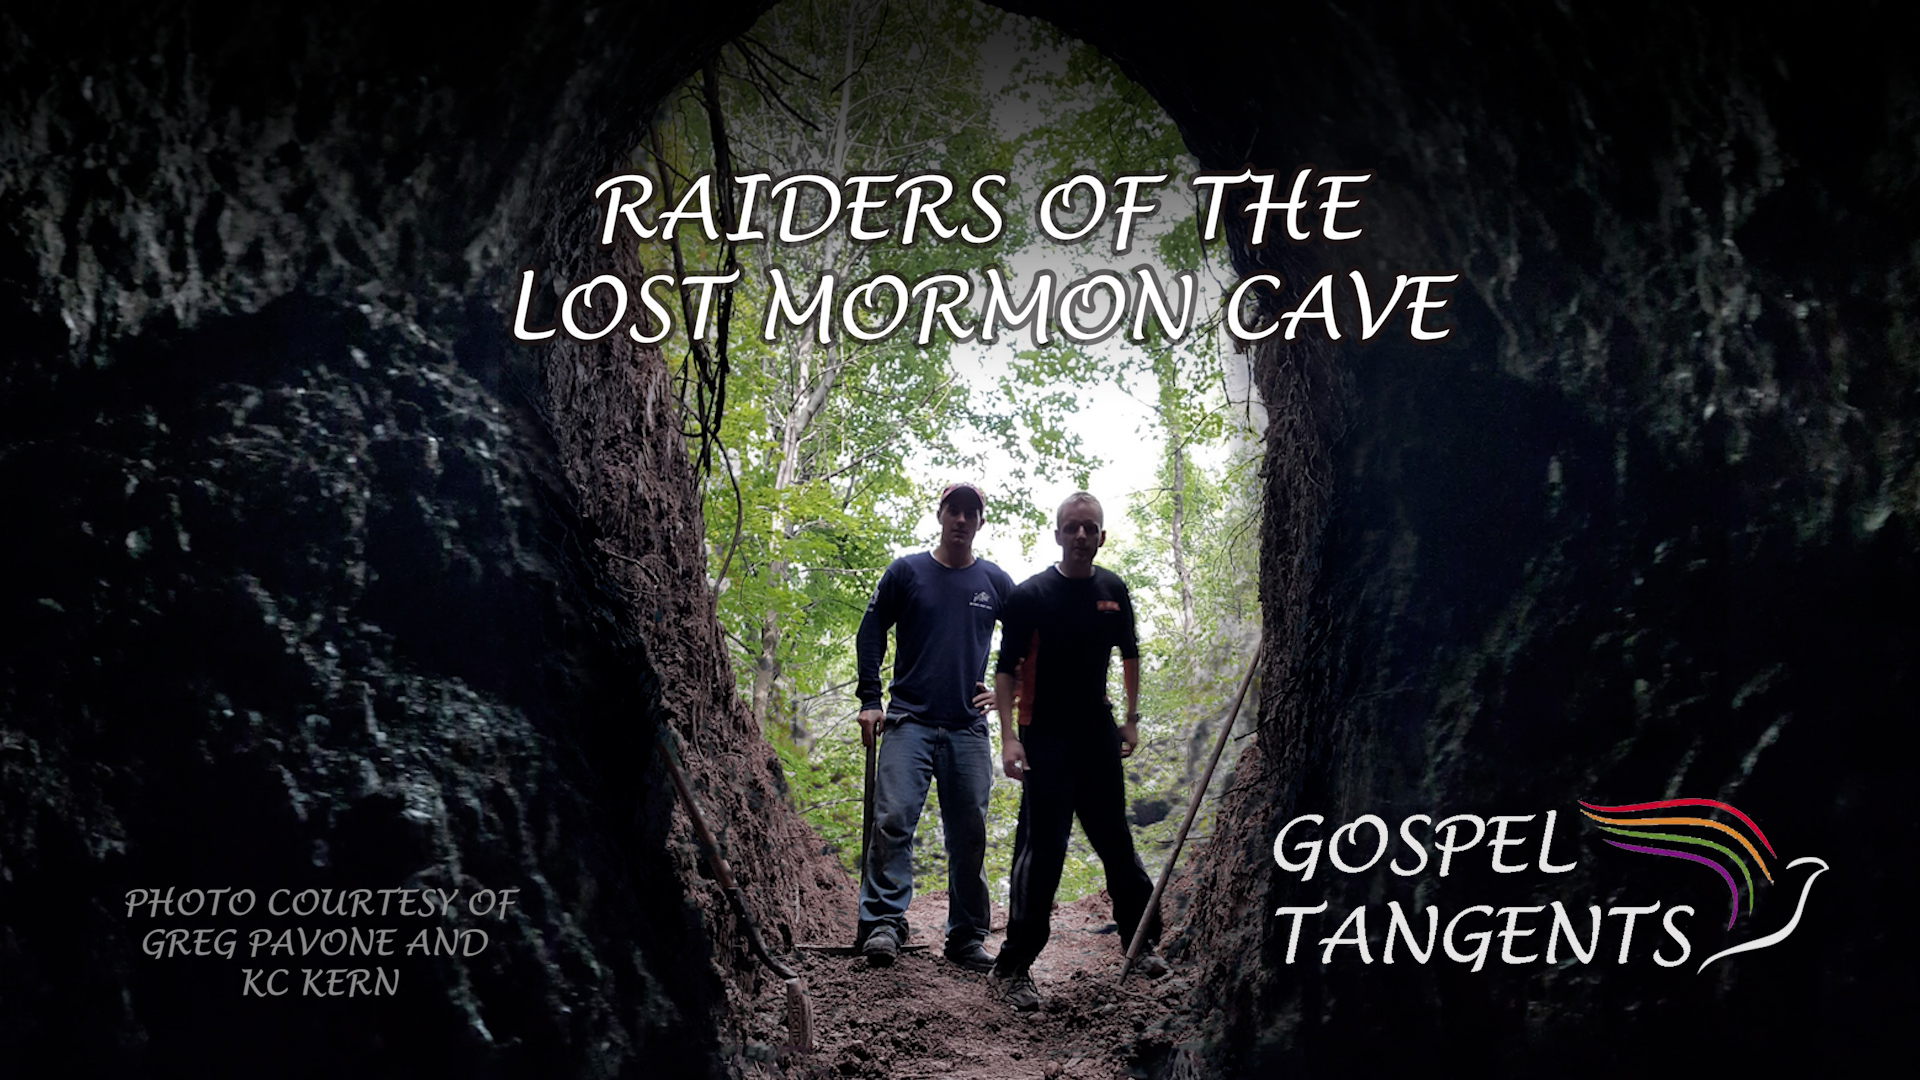 Lost Mormon Cave - Raiders of the Lost Mormon Cave (Part 1 of 6) - Mormon History Podcast